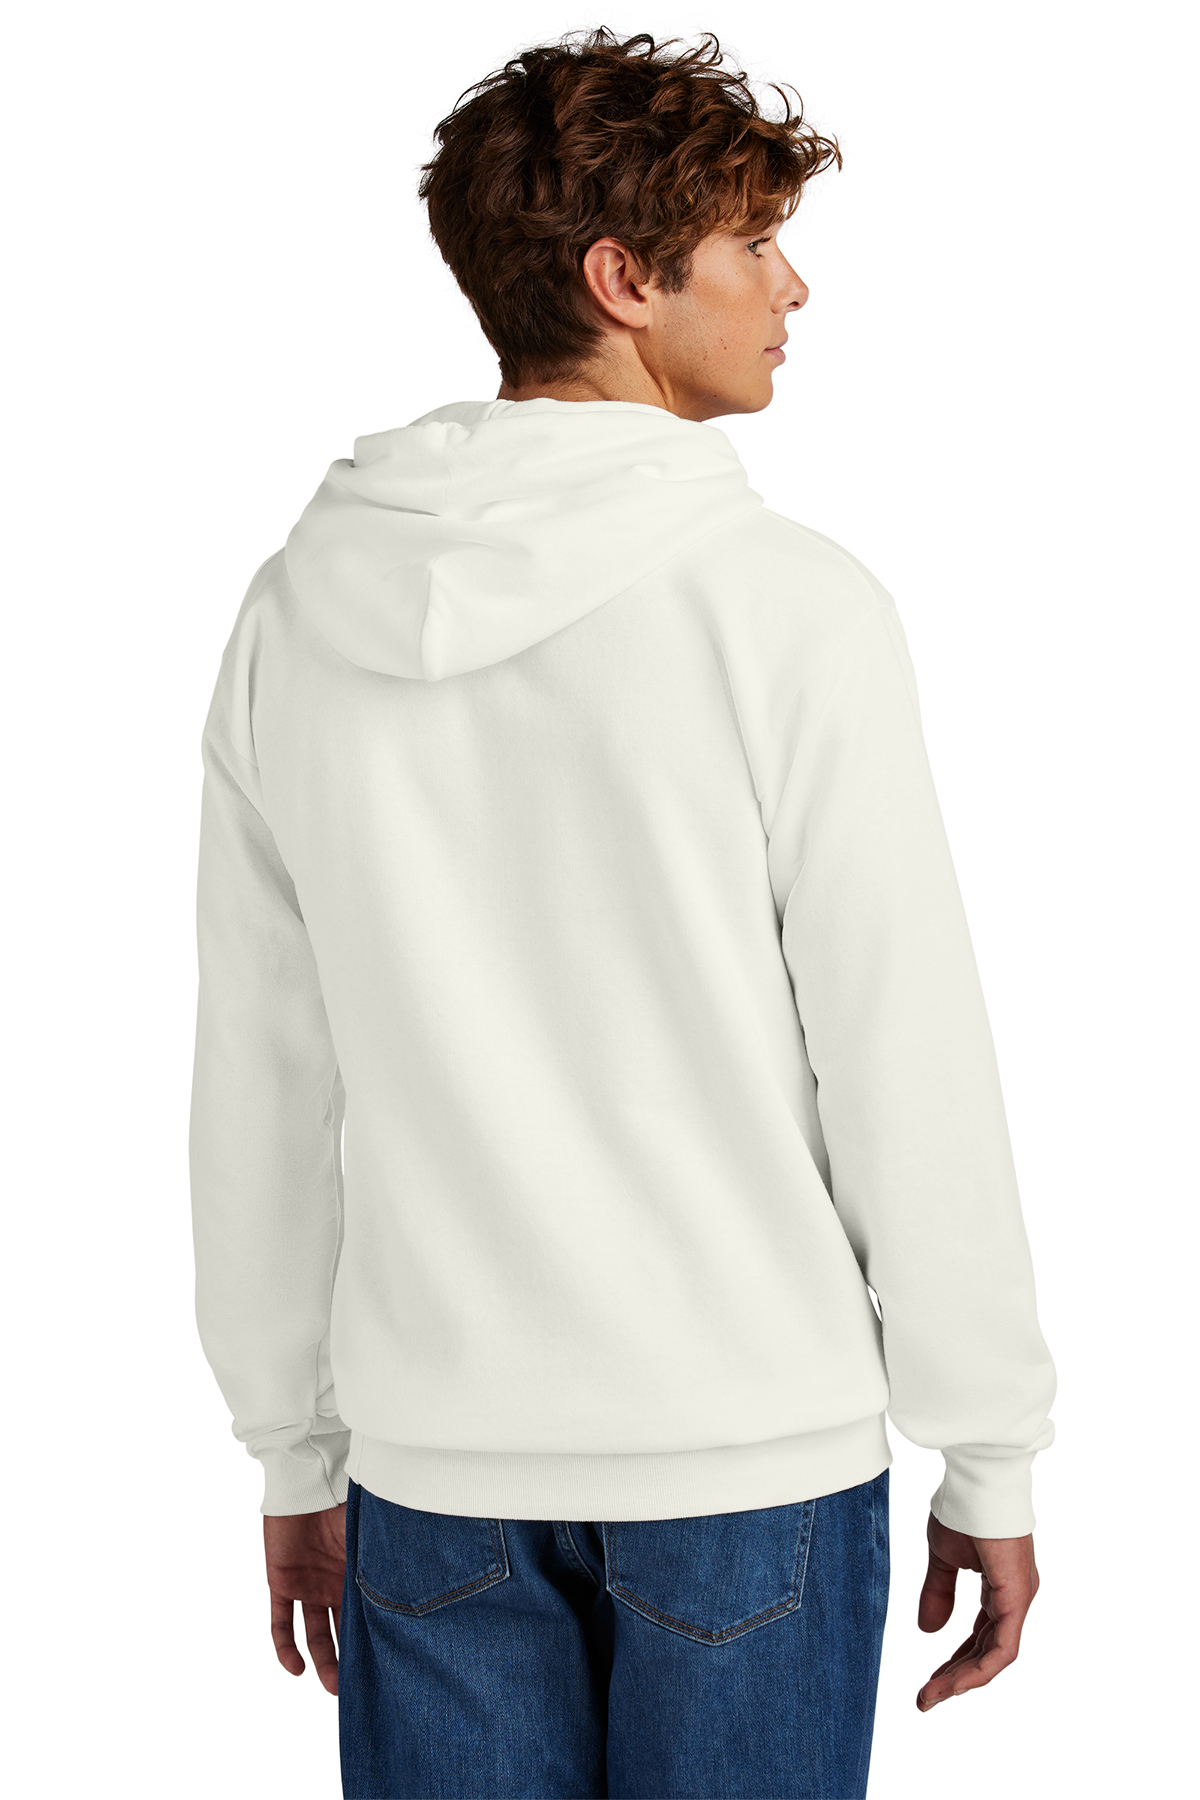 Port & Company Core Fleece PFD Pullover Hooded Sweatshirt